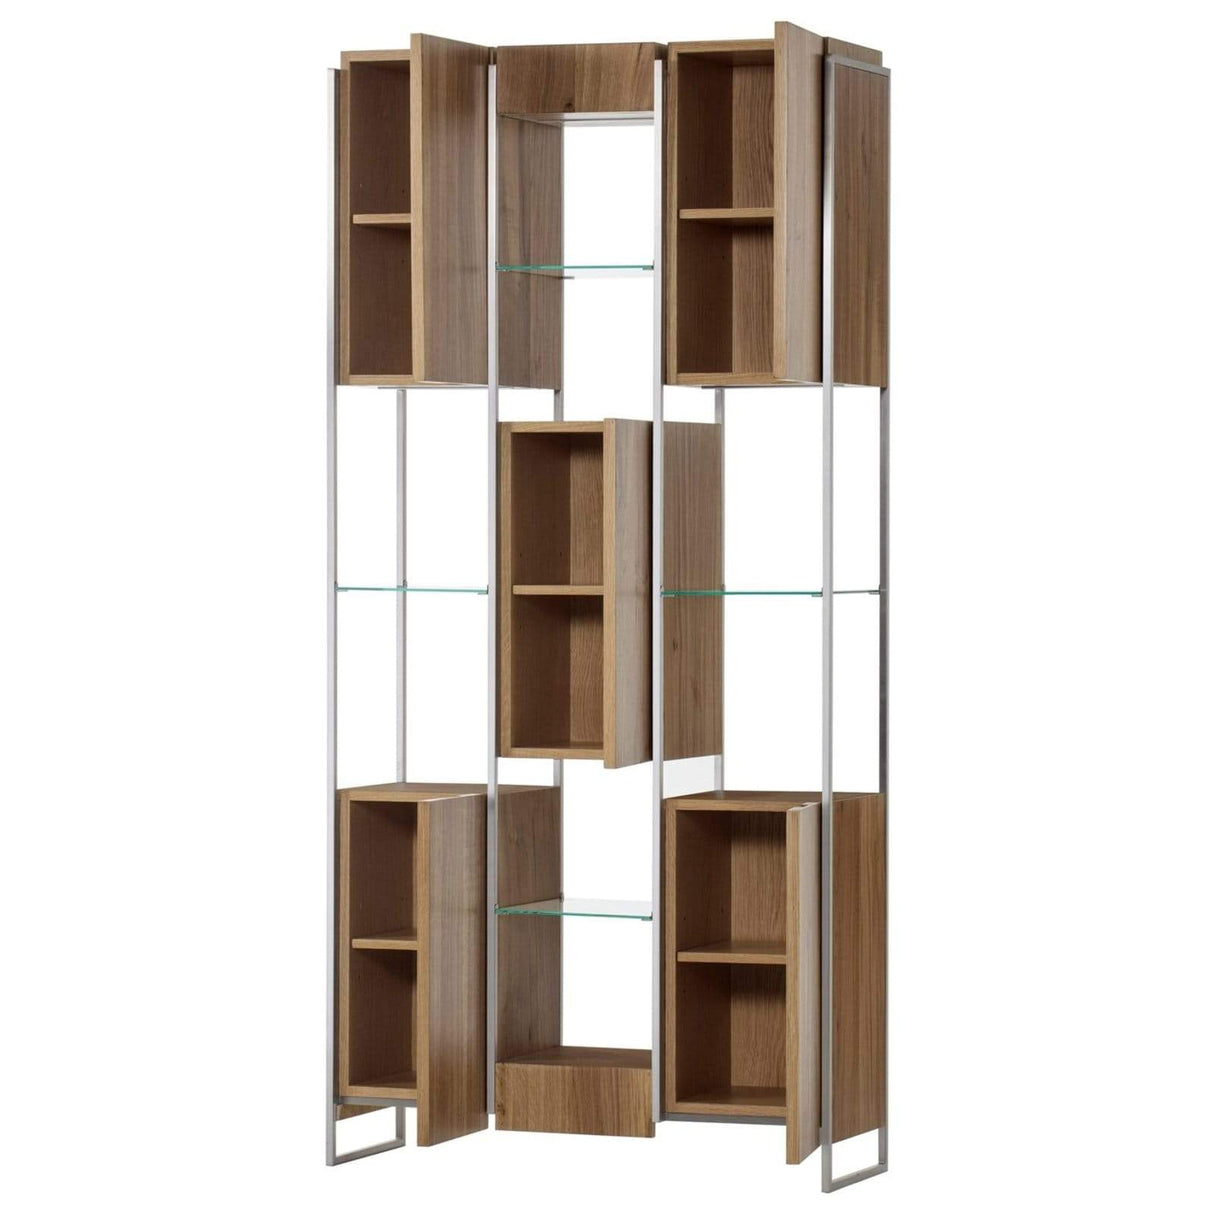 Thomas Bina Marley Bookcase - Large Light Oak Furniture thomas-bina-0704341